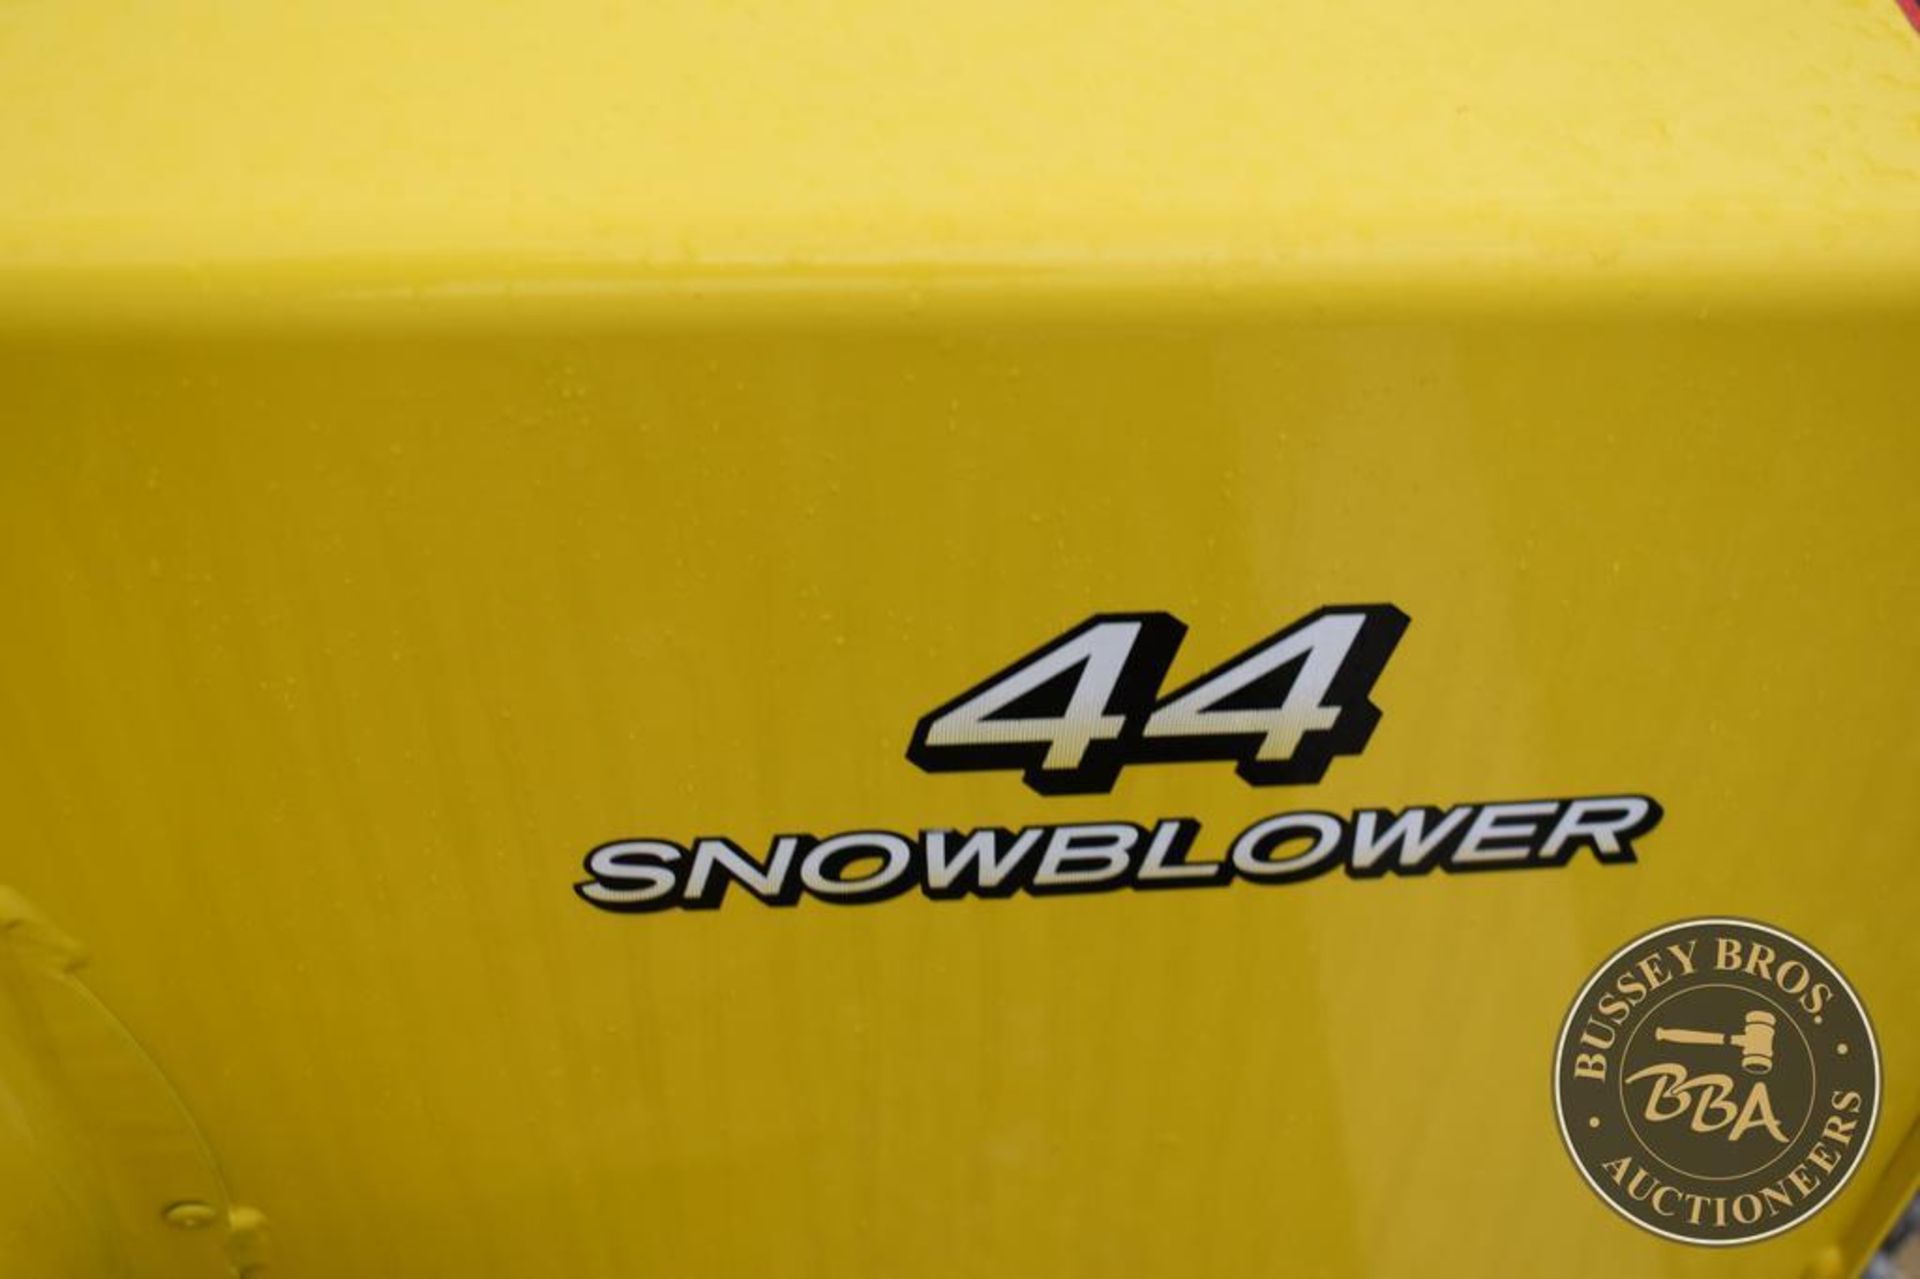 Snowblower JOHN DEERE 44 SNOW BLOWER 27325 - Image 6 of 10